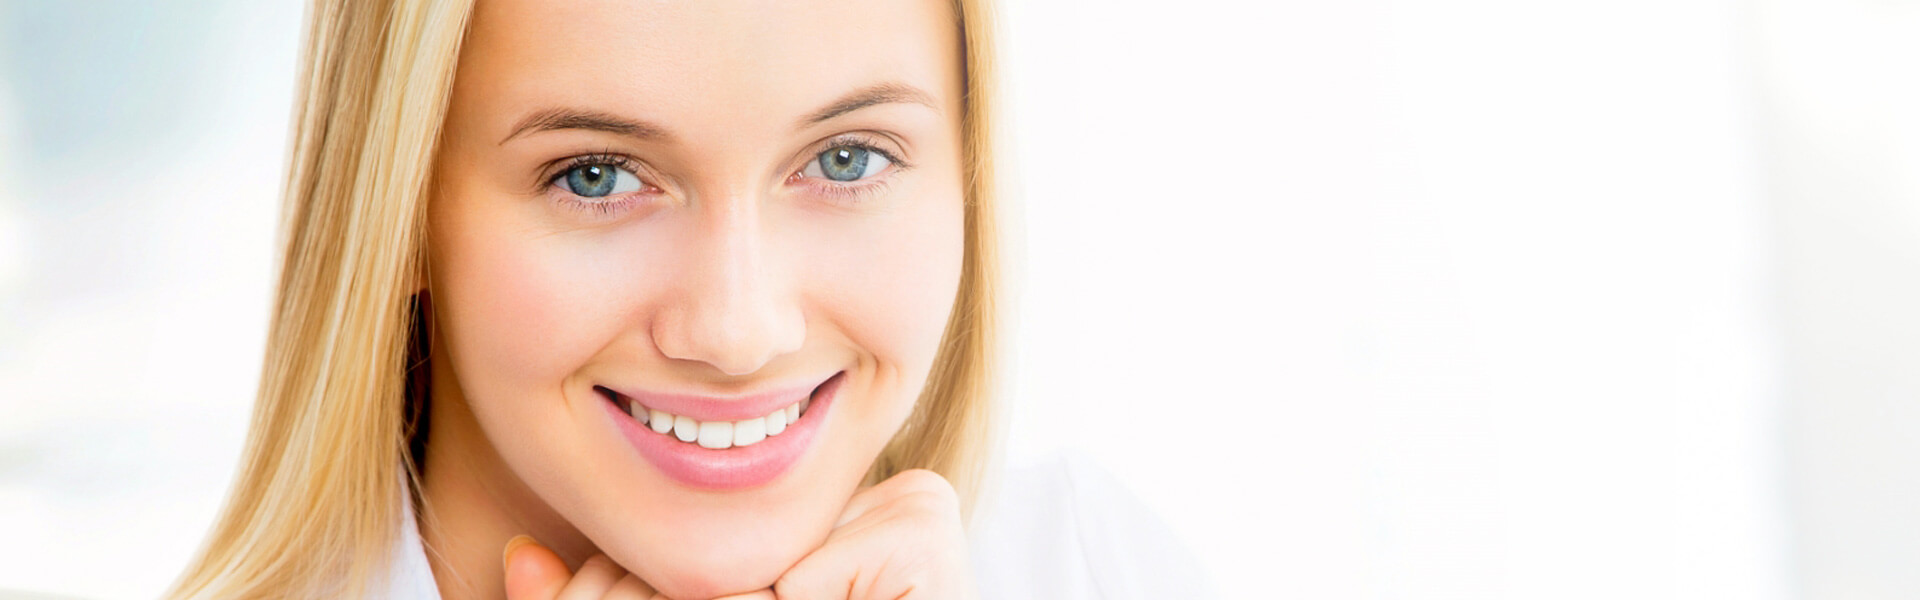 Young beautiful woman smiling showing white teeth